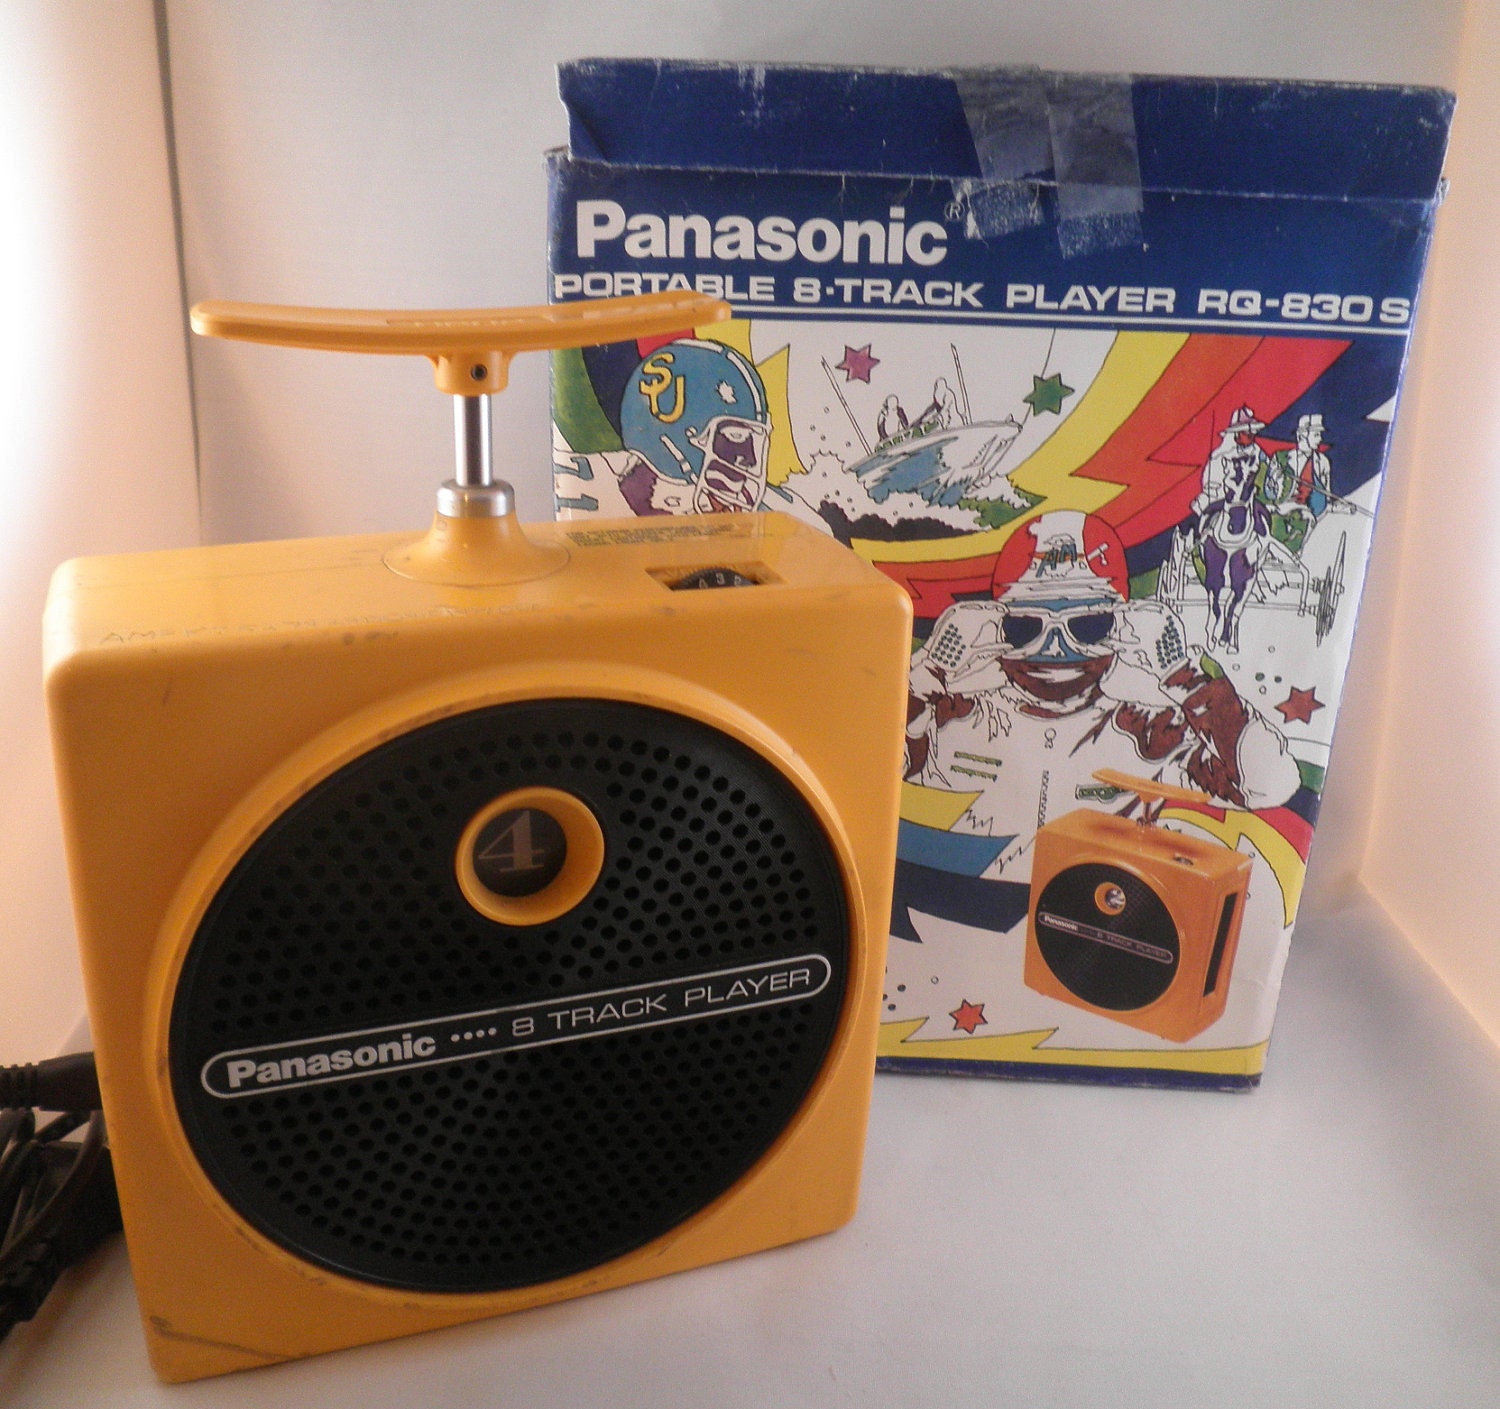 Yellow Panasonic TNT 8-track player